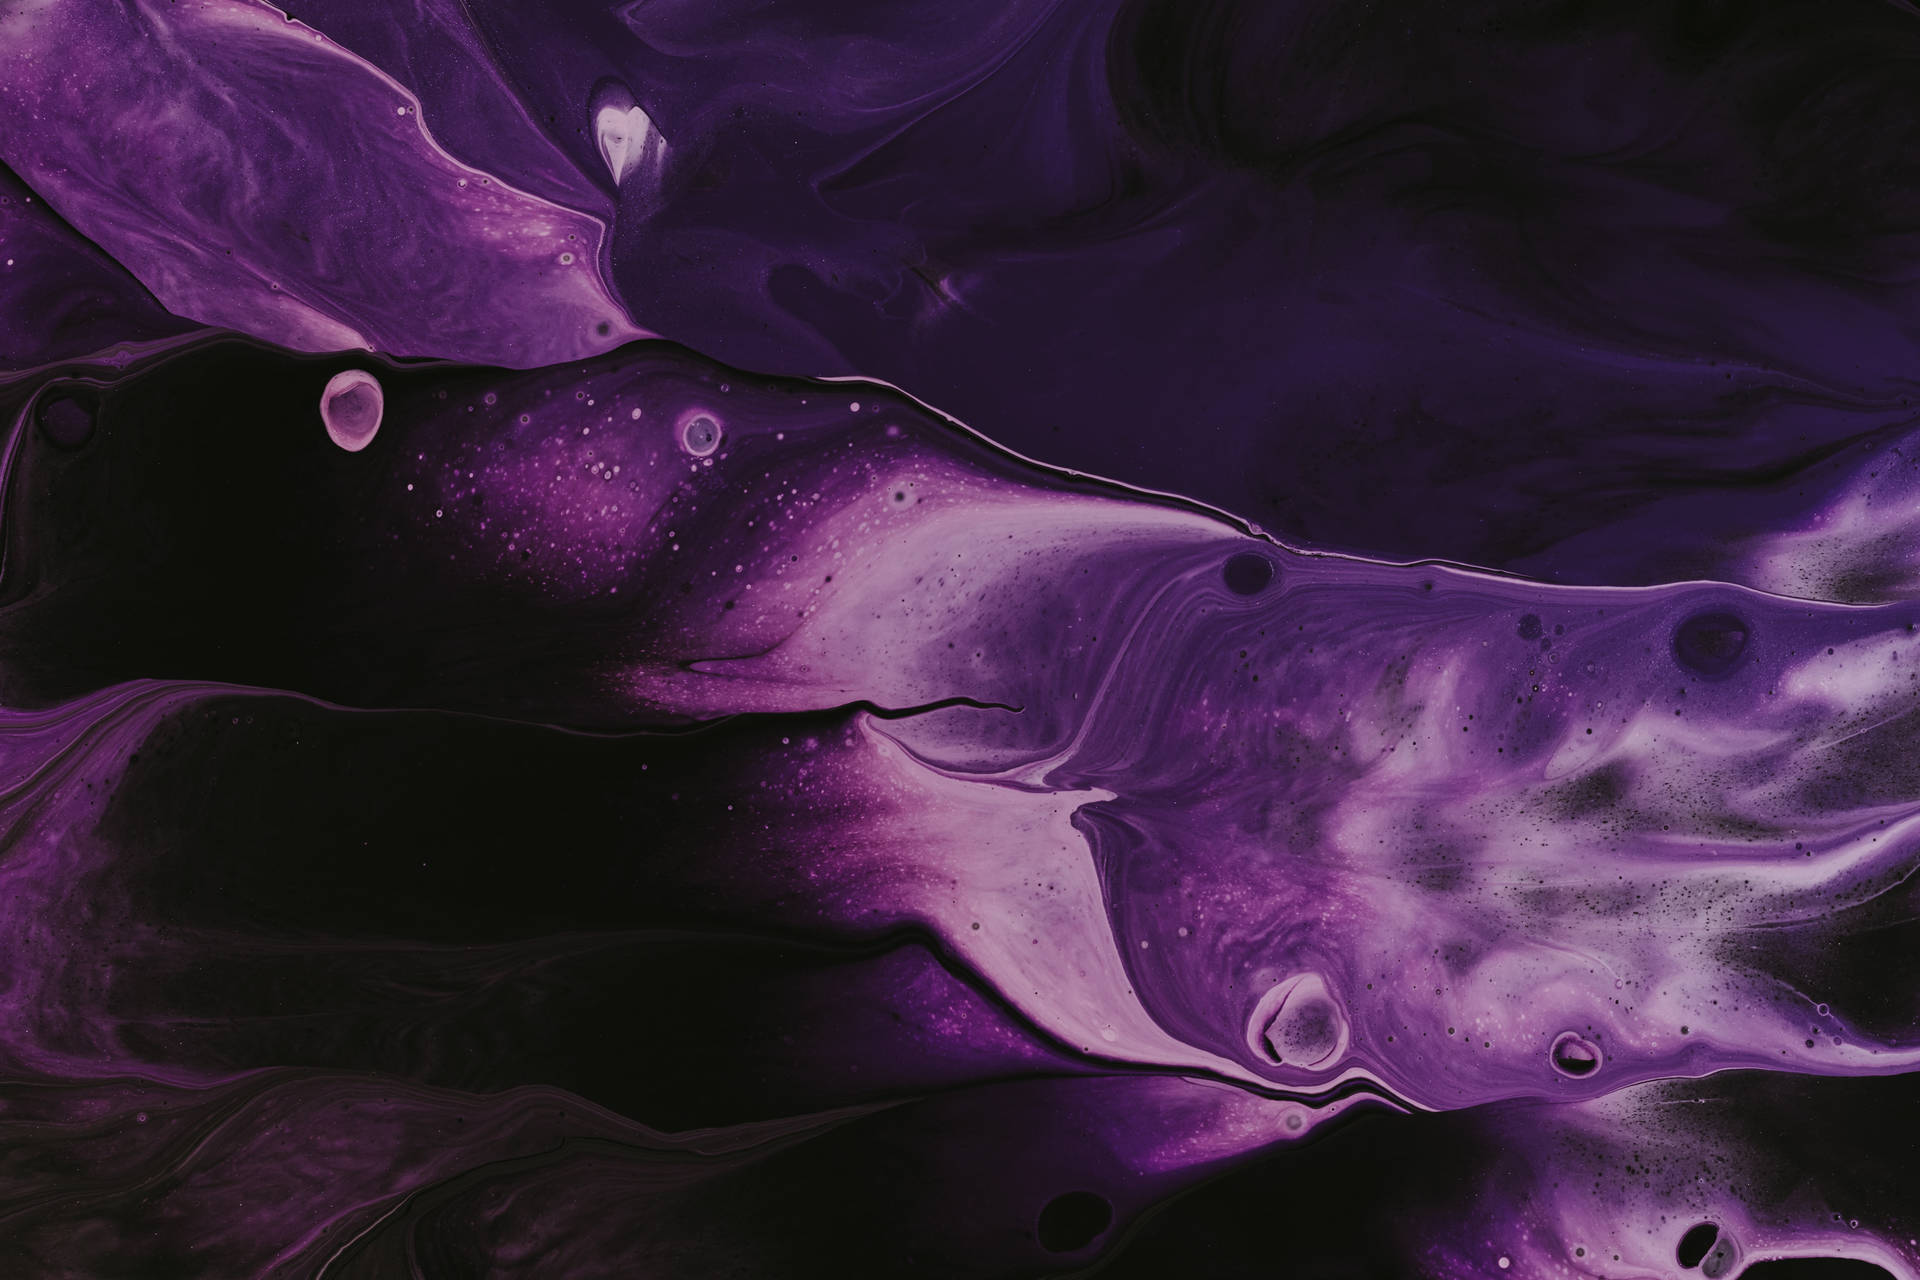 Purple Liquid With Black And White Swirls Wallpaper